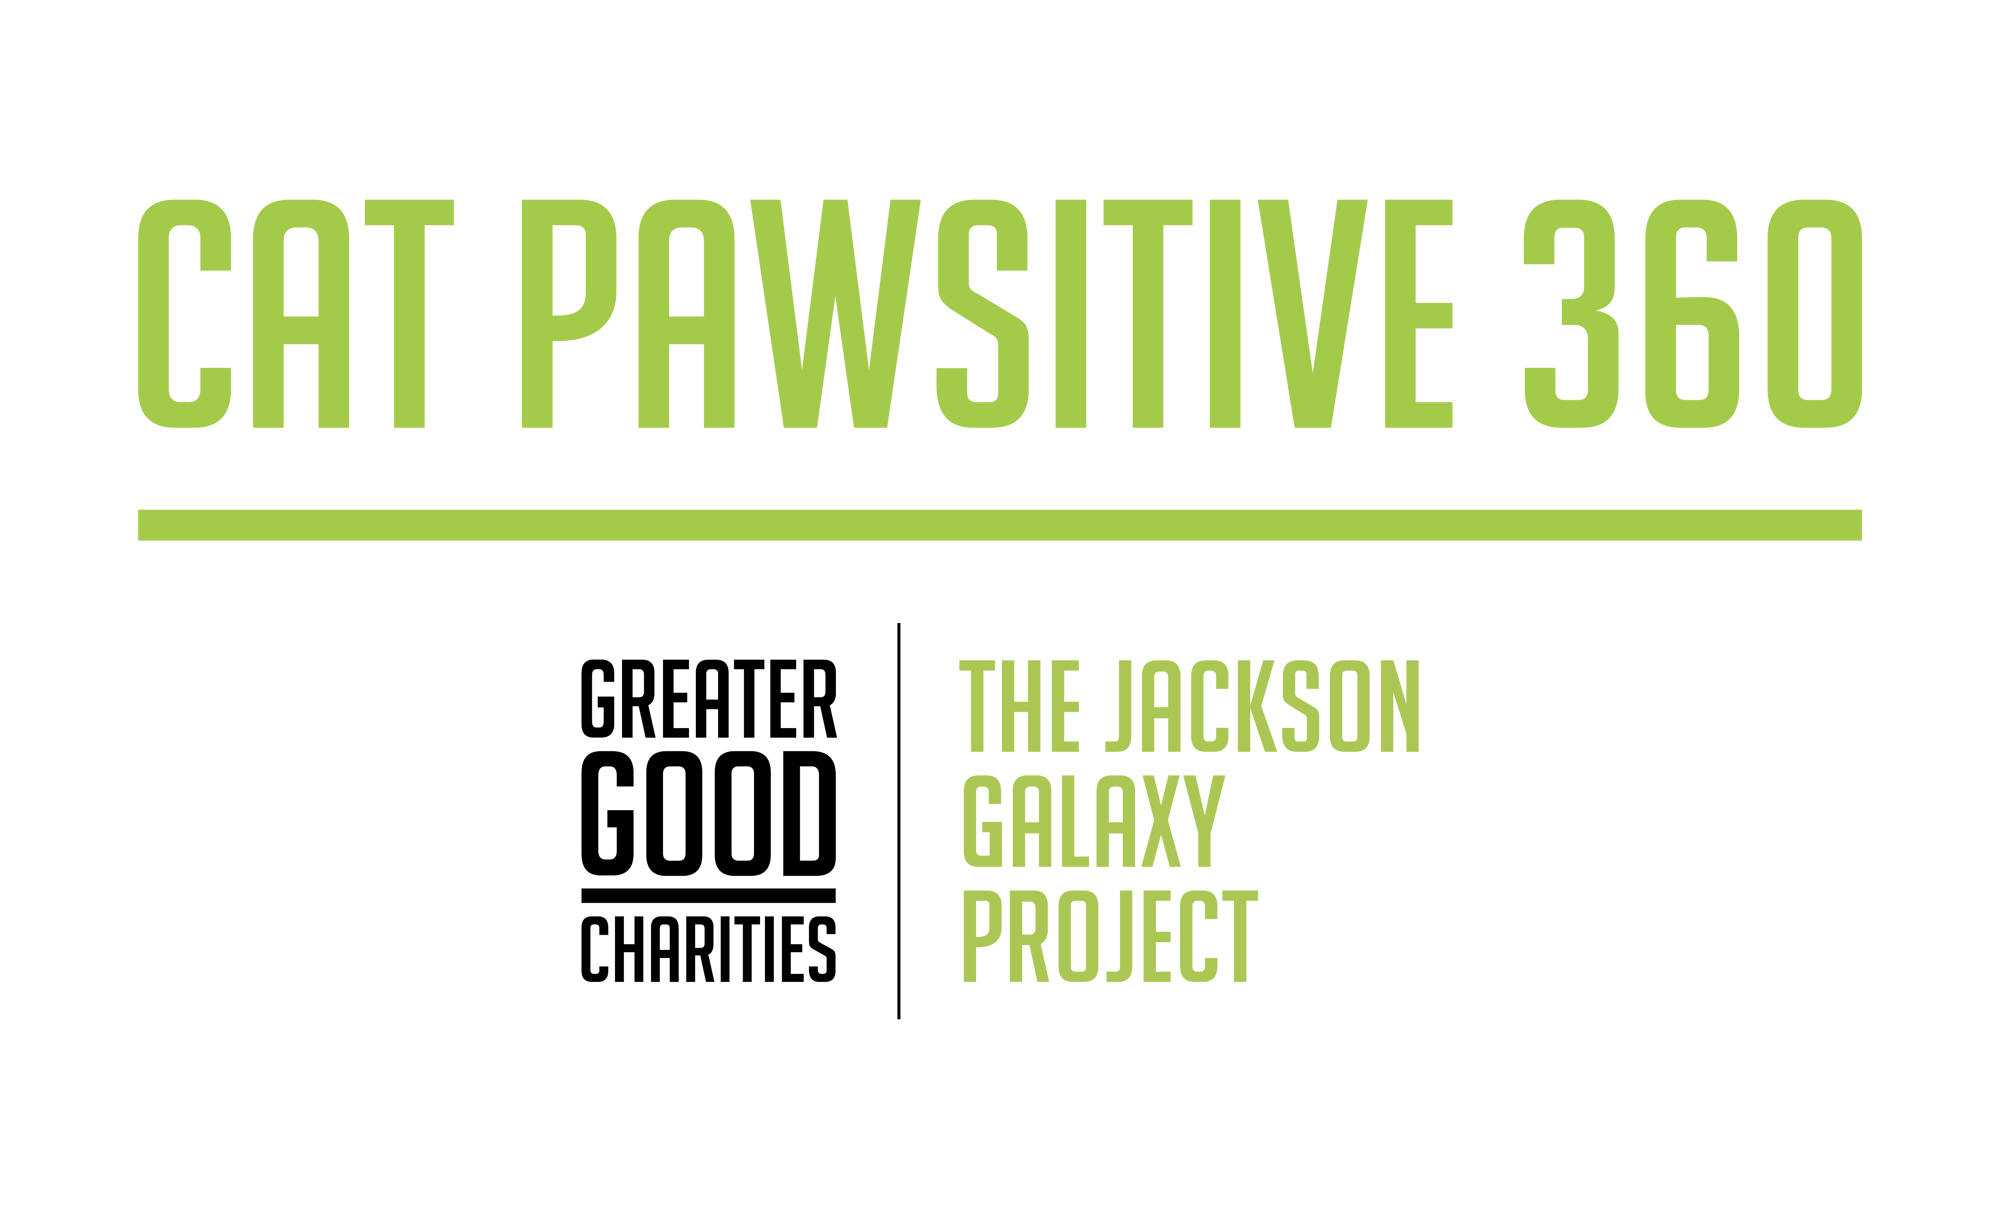 cat-pawsitive-360-initiative-logo_cat-pawsitive-360-logo-full-color-1